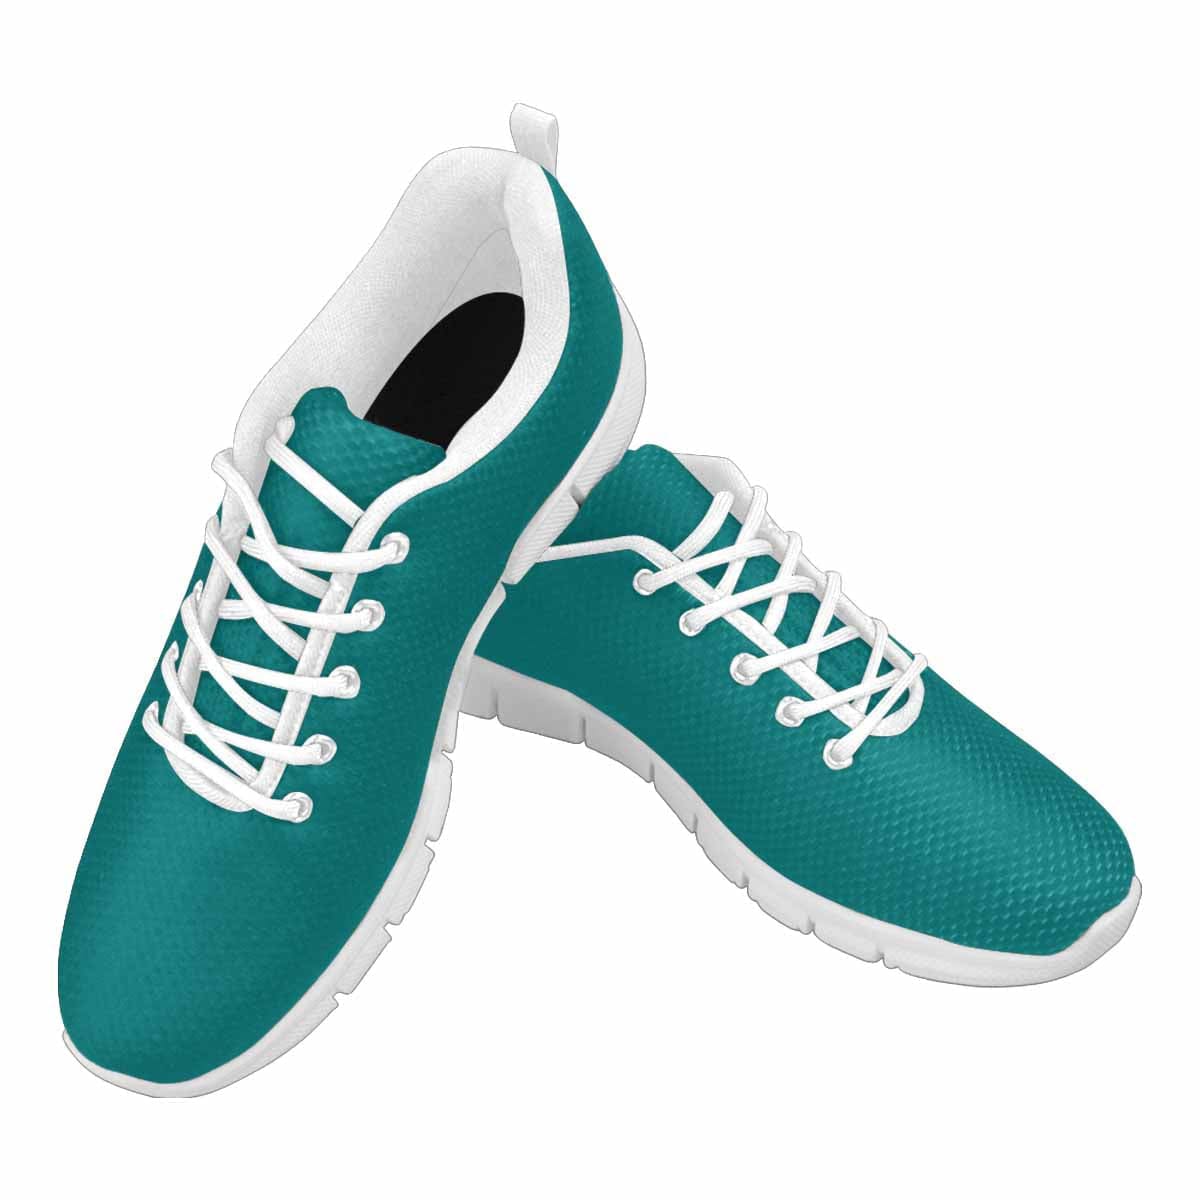 Sneakers For Men Dark Teal Green - Running Shoes - Mens | Sneakers | Running